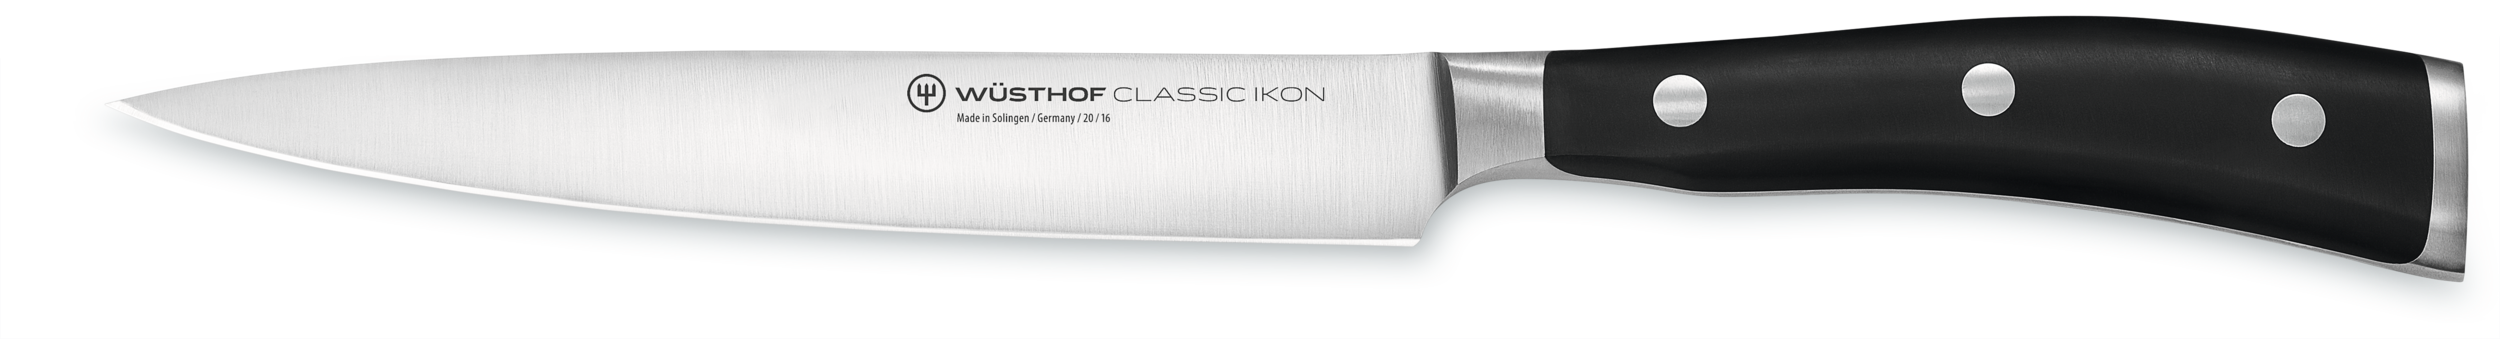 Wusthof Classic Ikon Black Utility Knife 16cm 1040330716